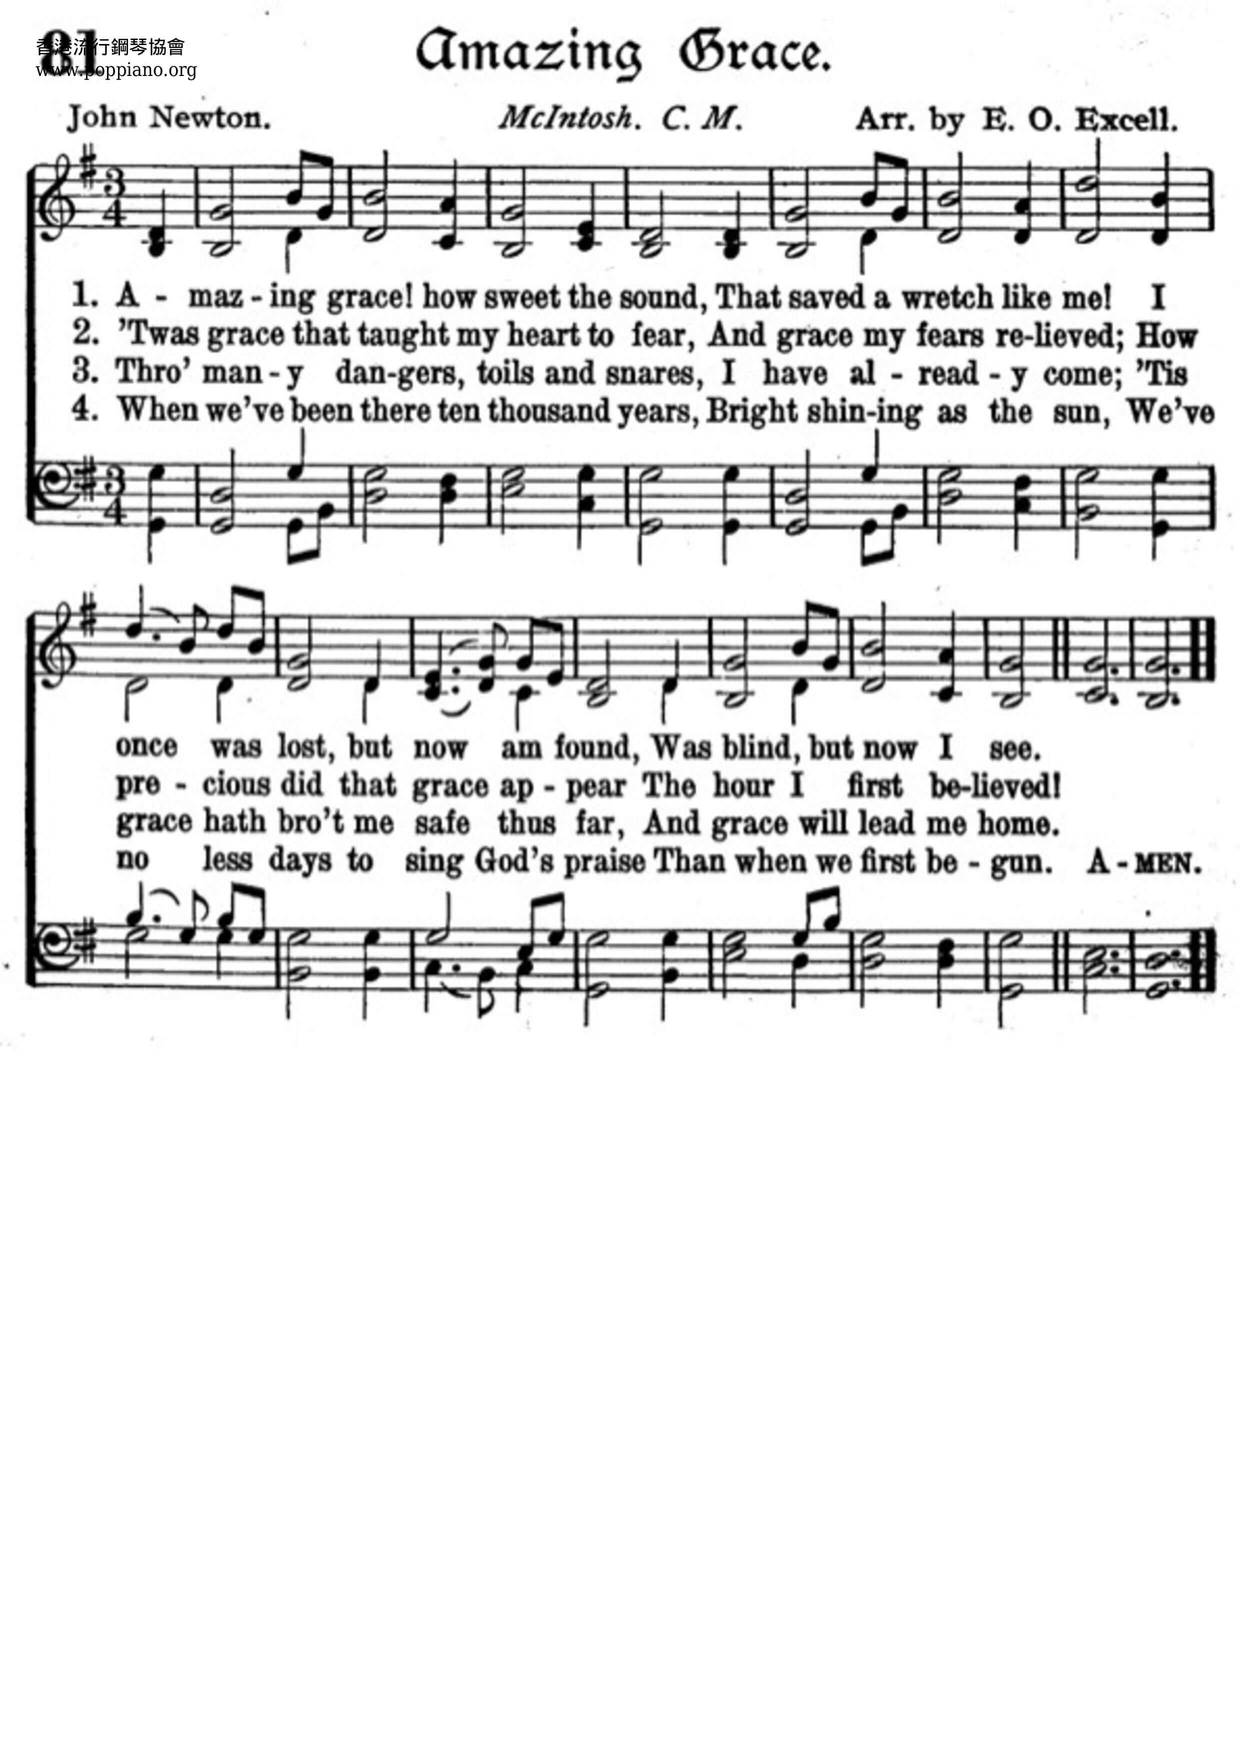 hymn-amazing-grace-sheet-music-pdf-free-score-download